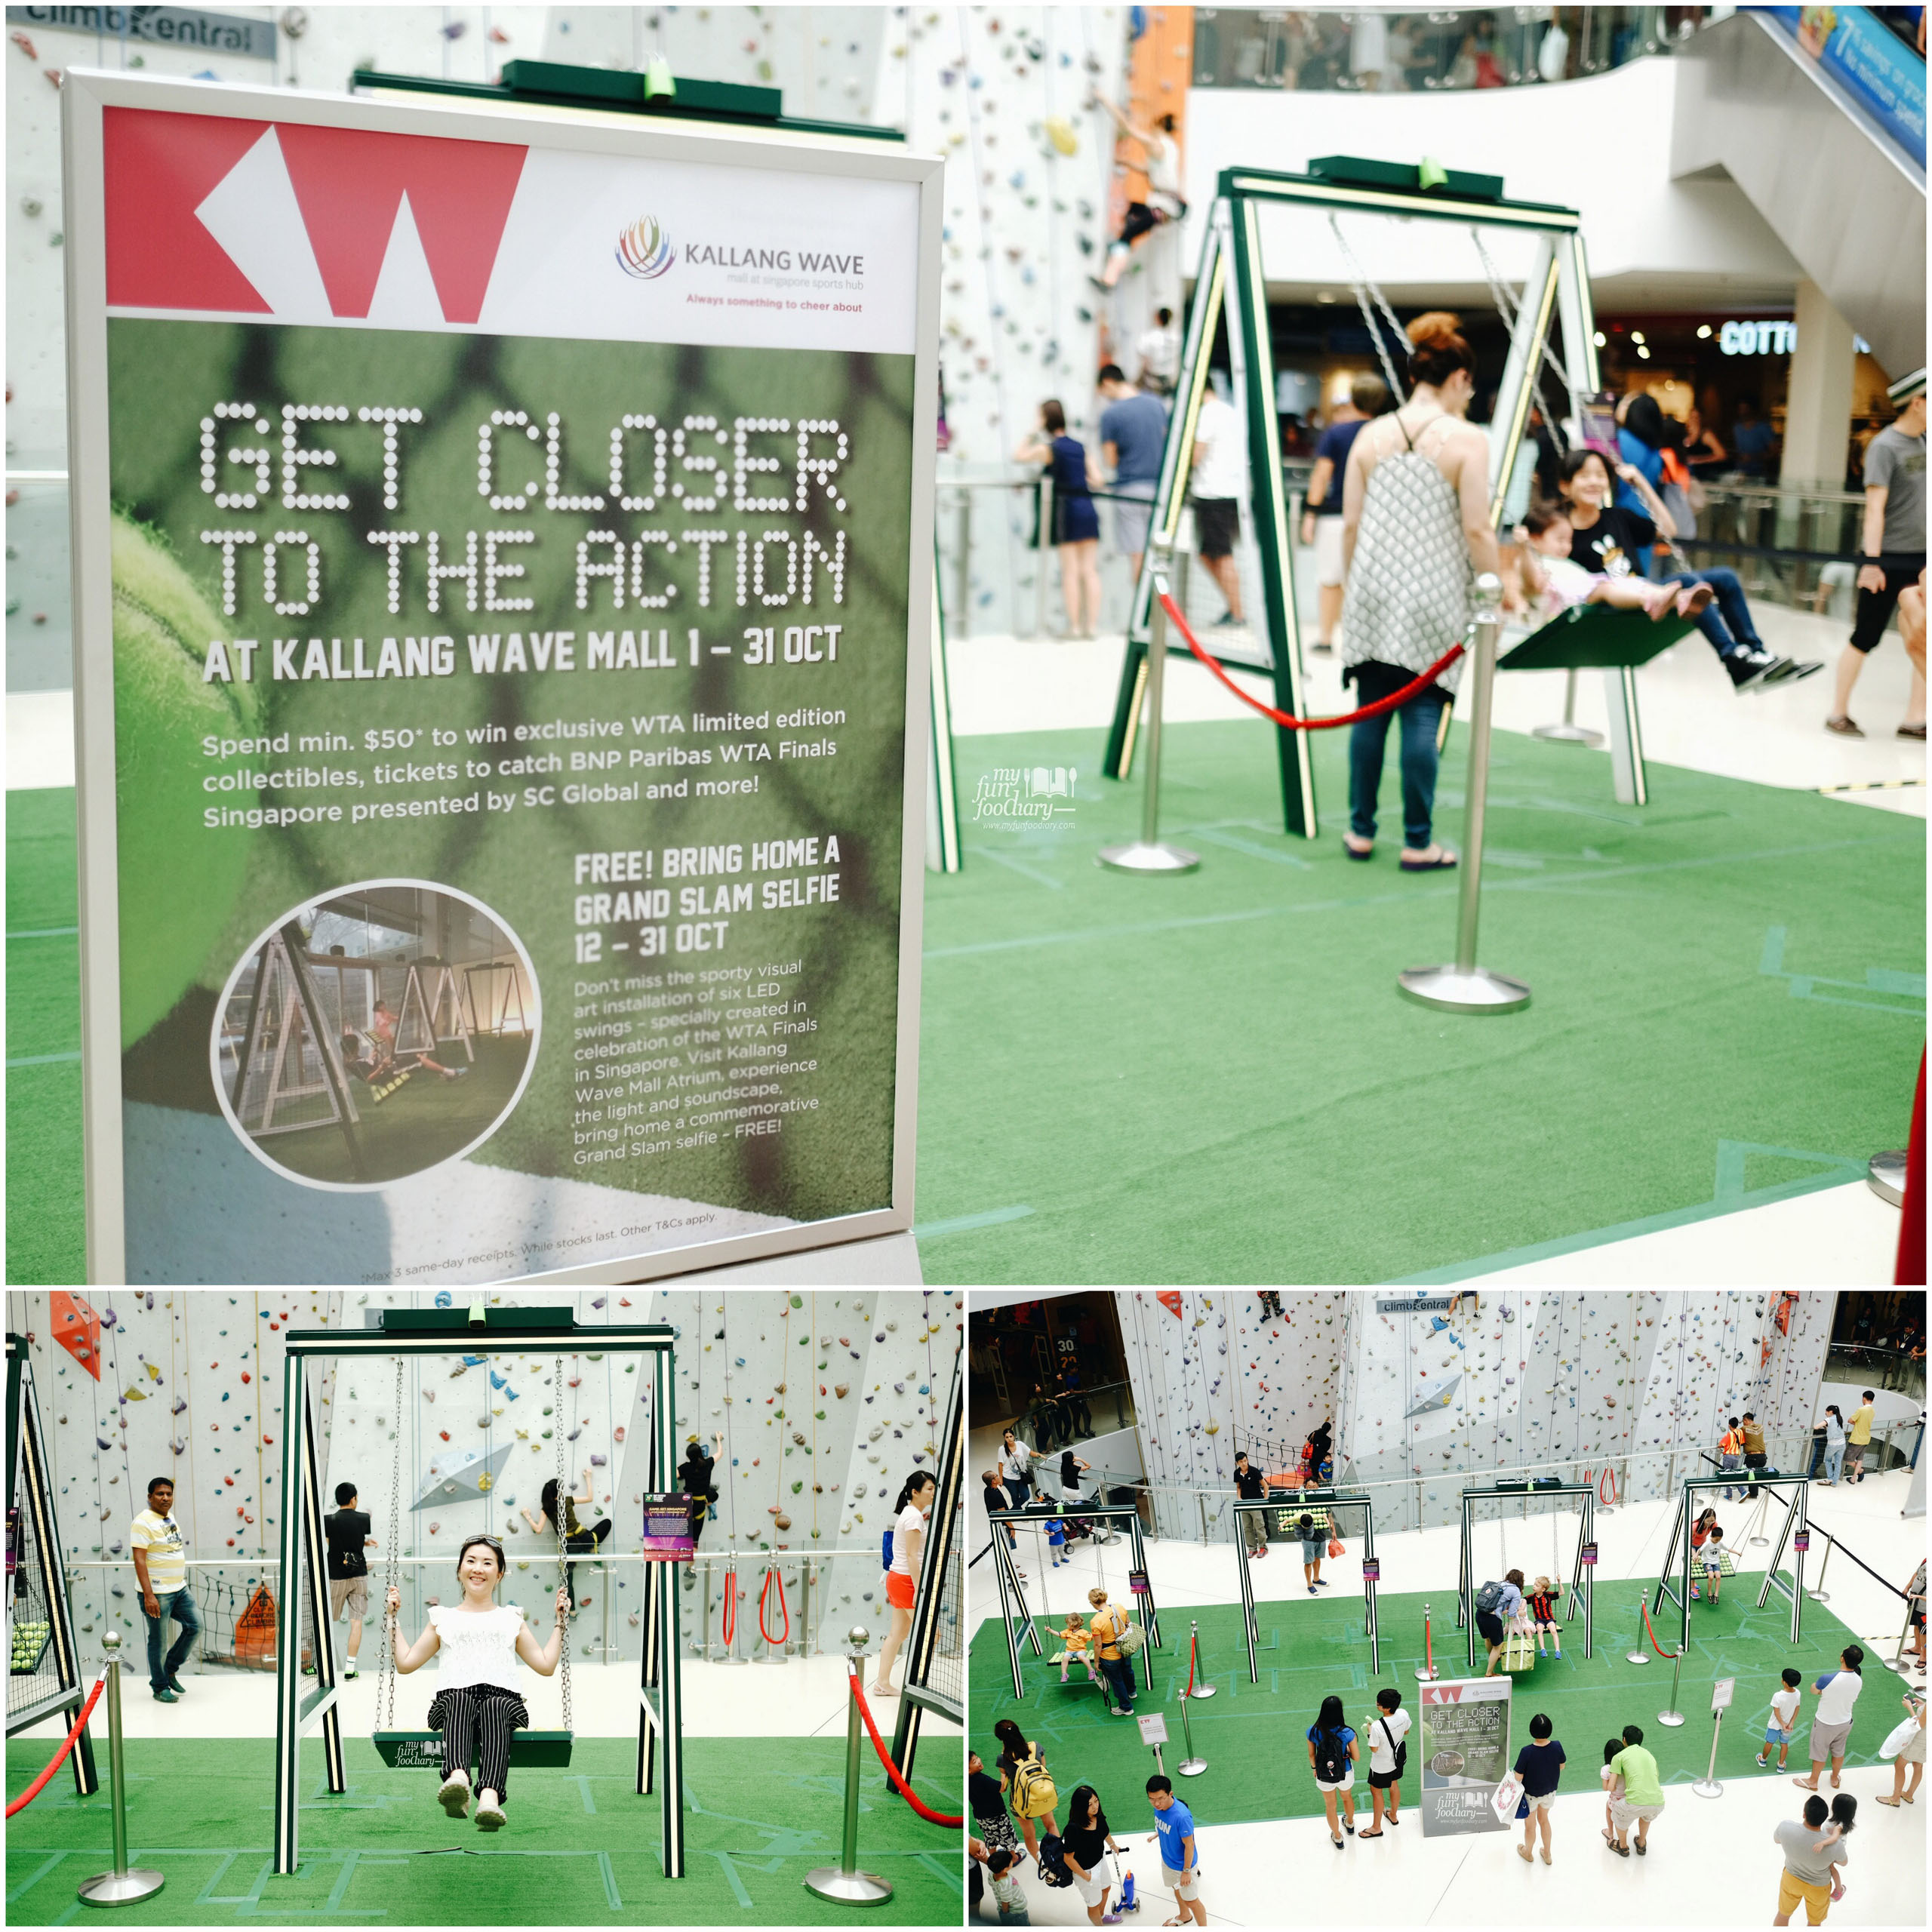 Racquet Swing at Kallang Wave Singapore by Myfunfoodiary